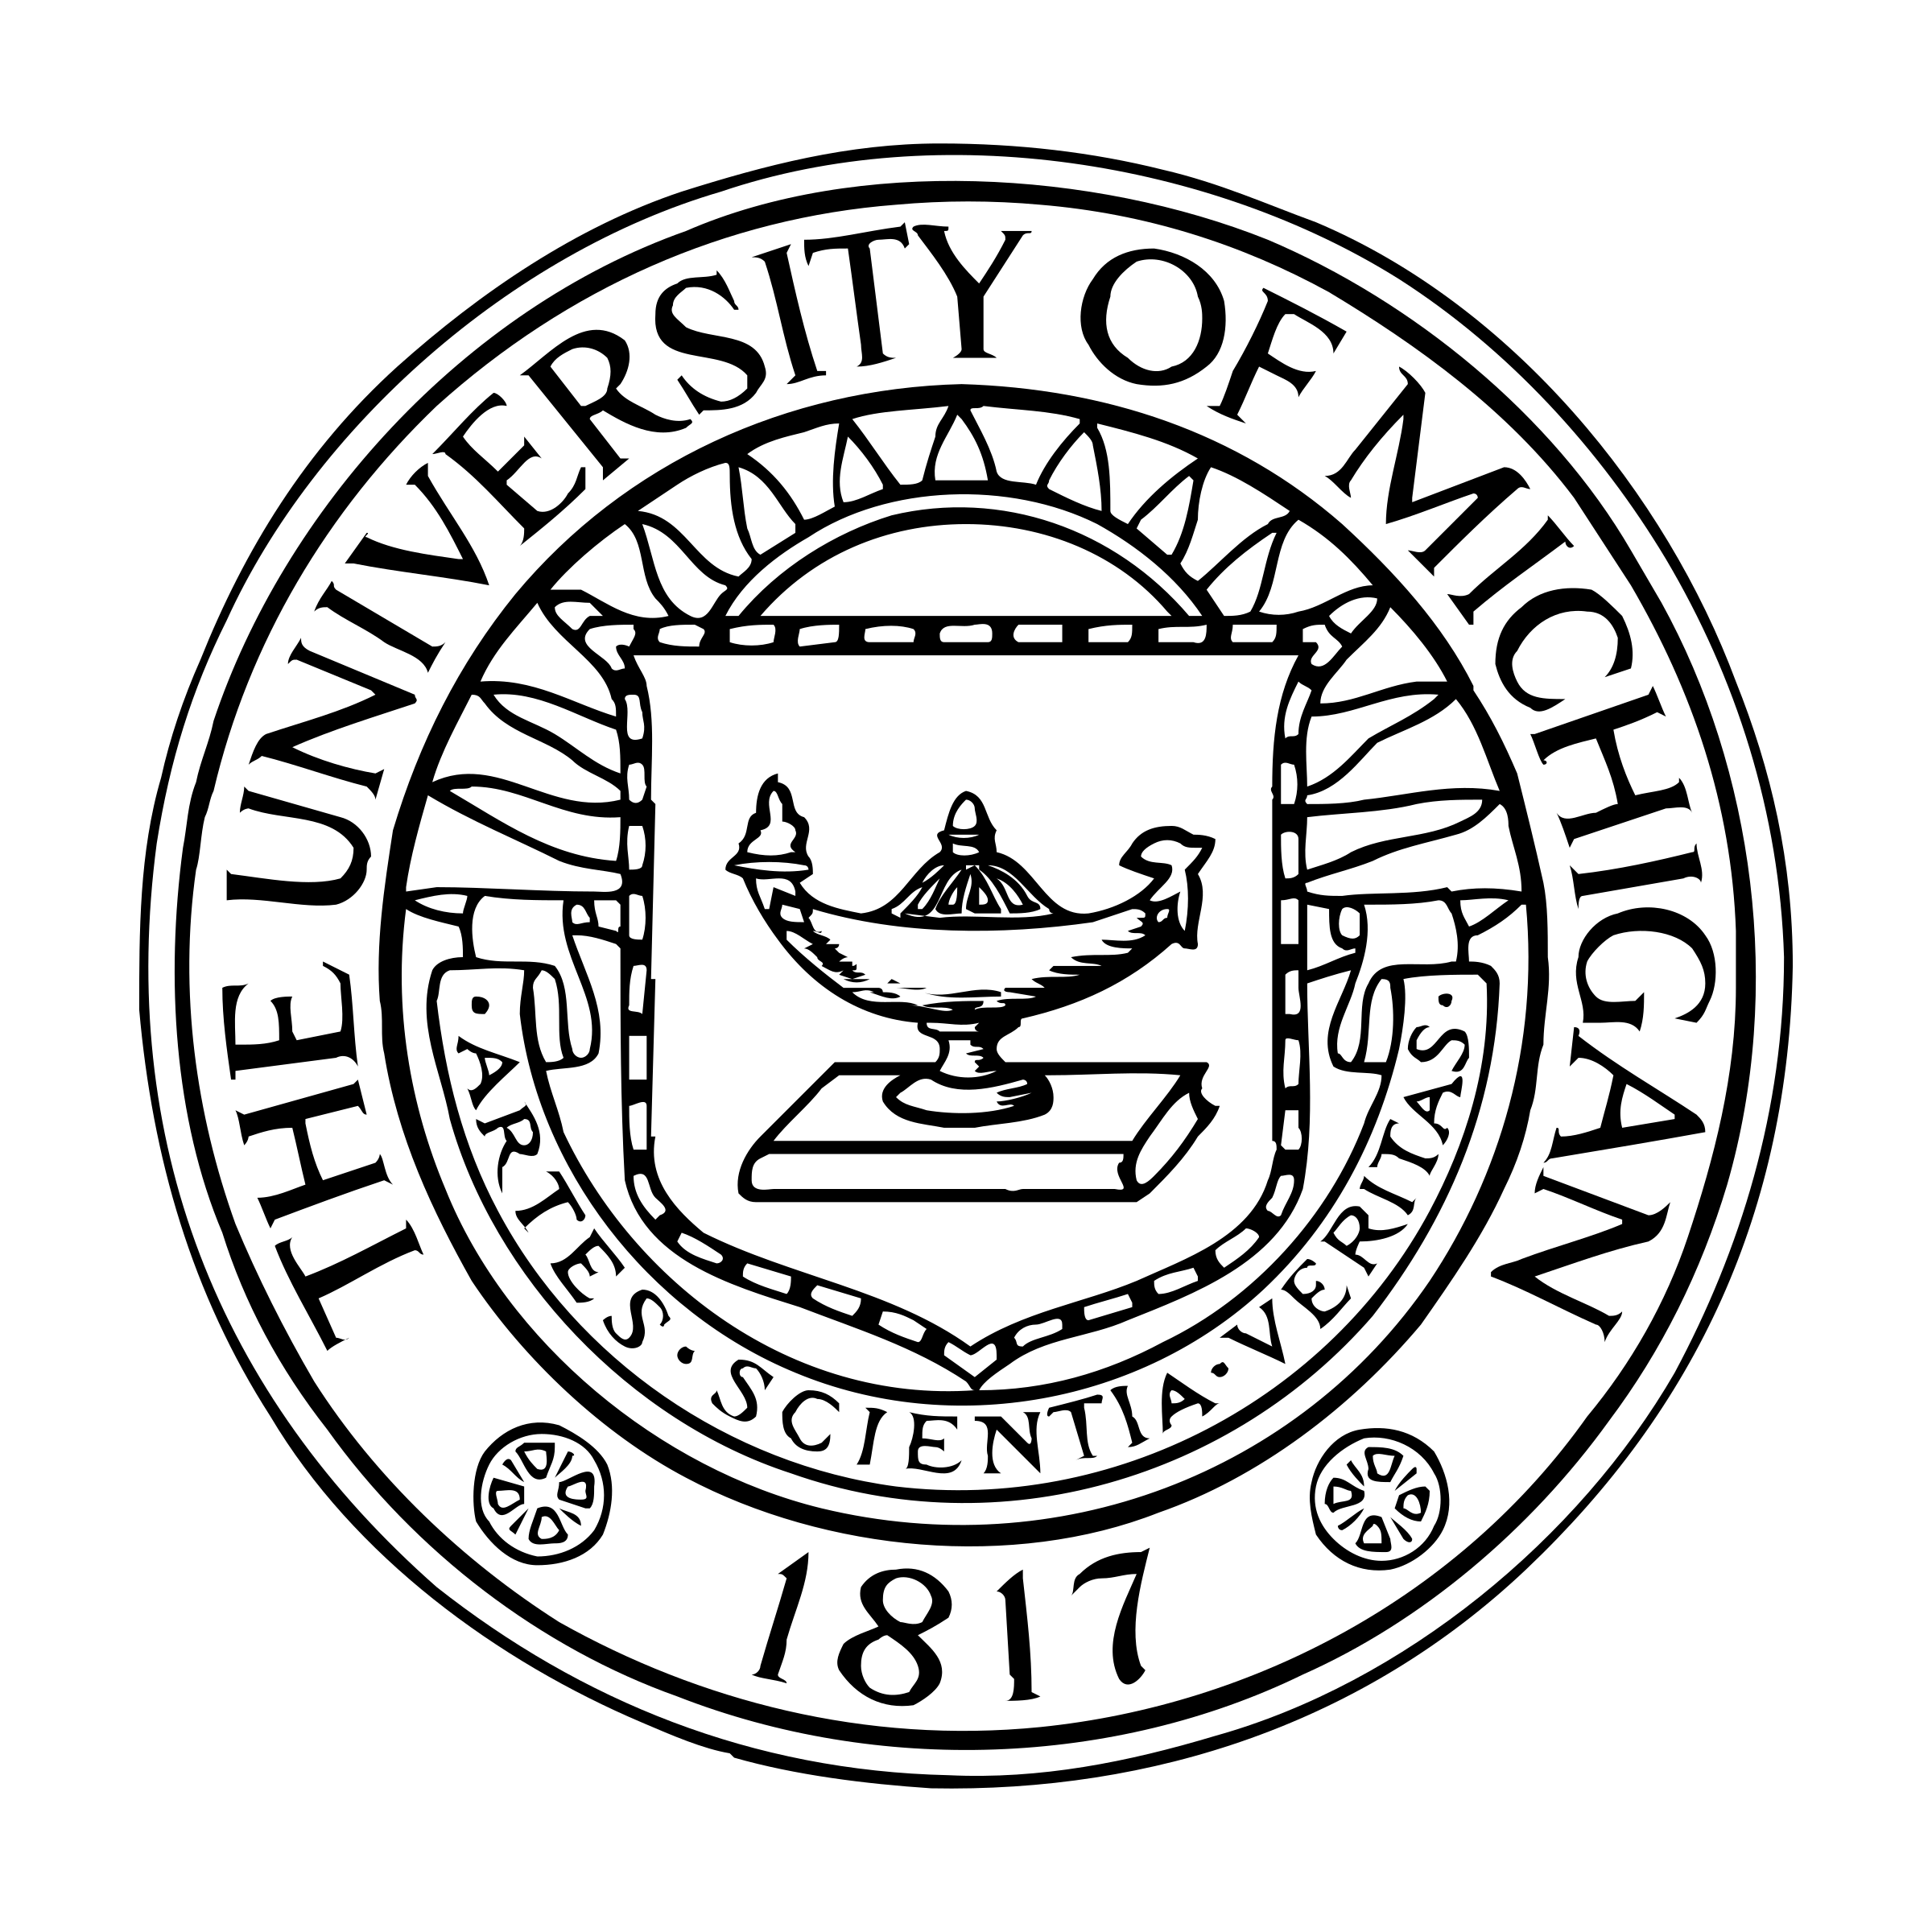 Black and White University of Michigan Logo - University of Michigan Logo PNG Transparent & SVG Vector - Freebie ...